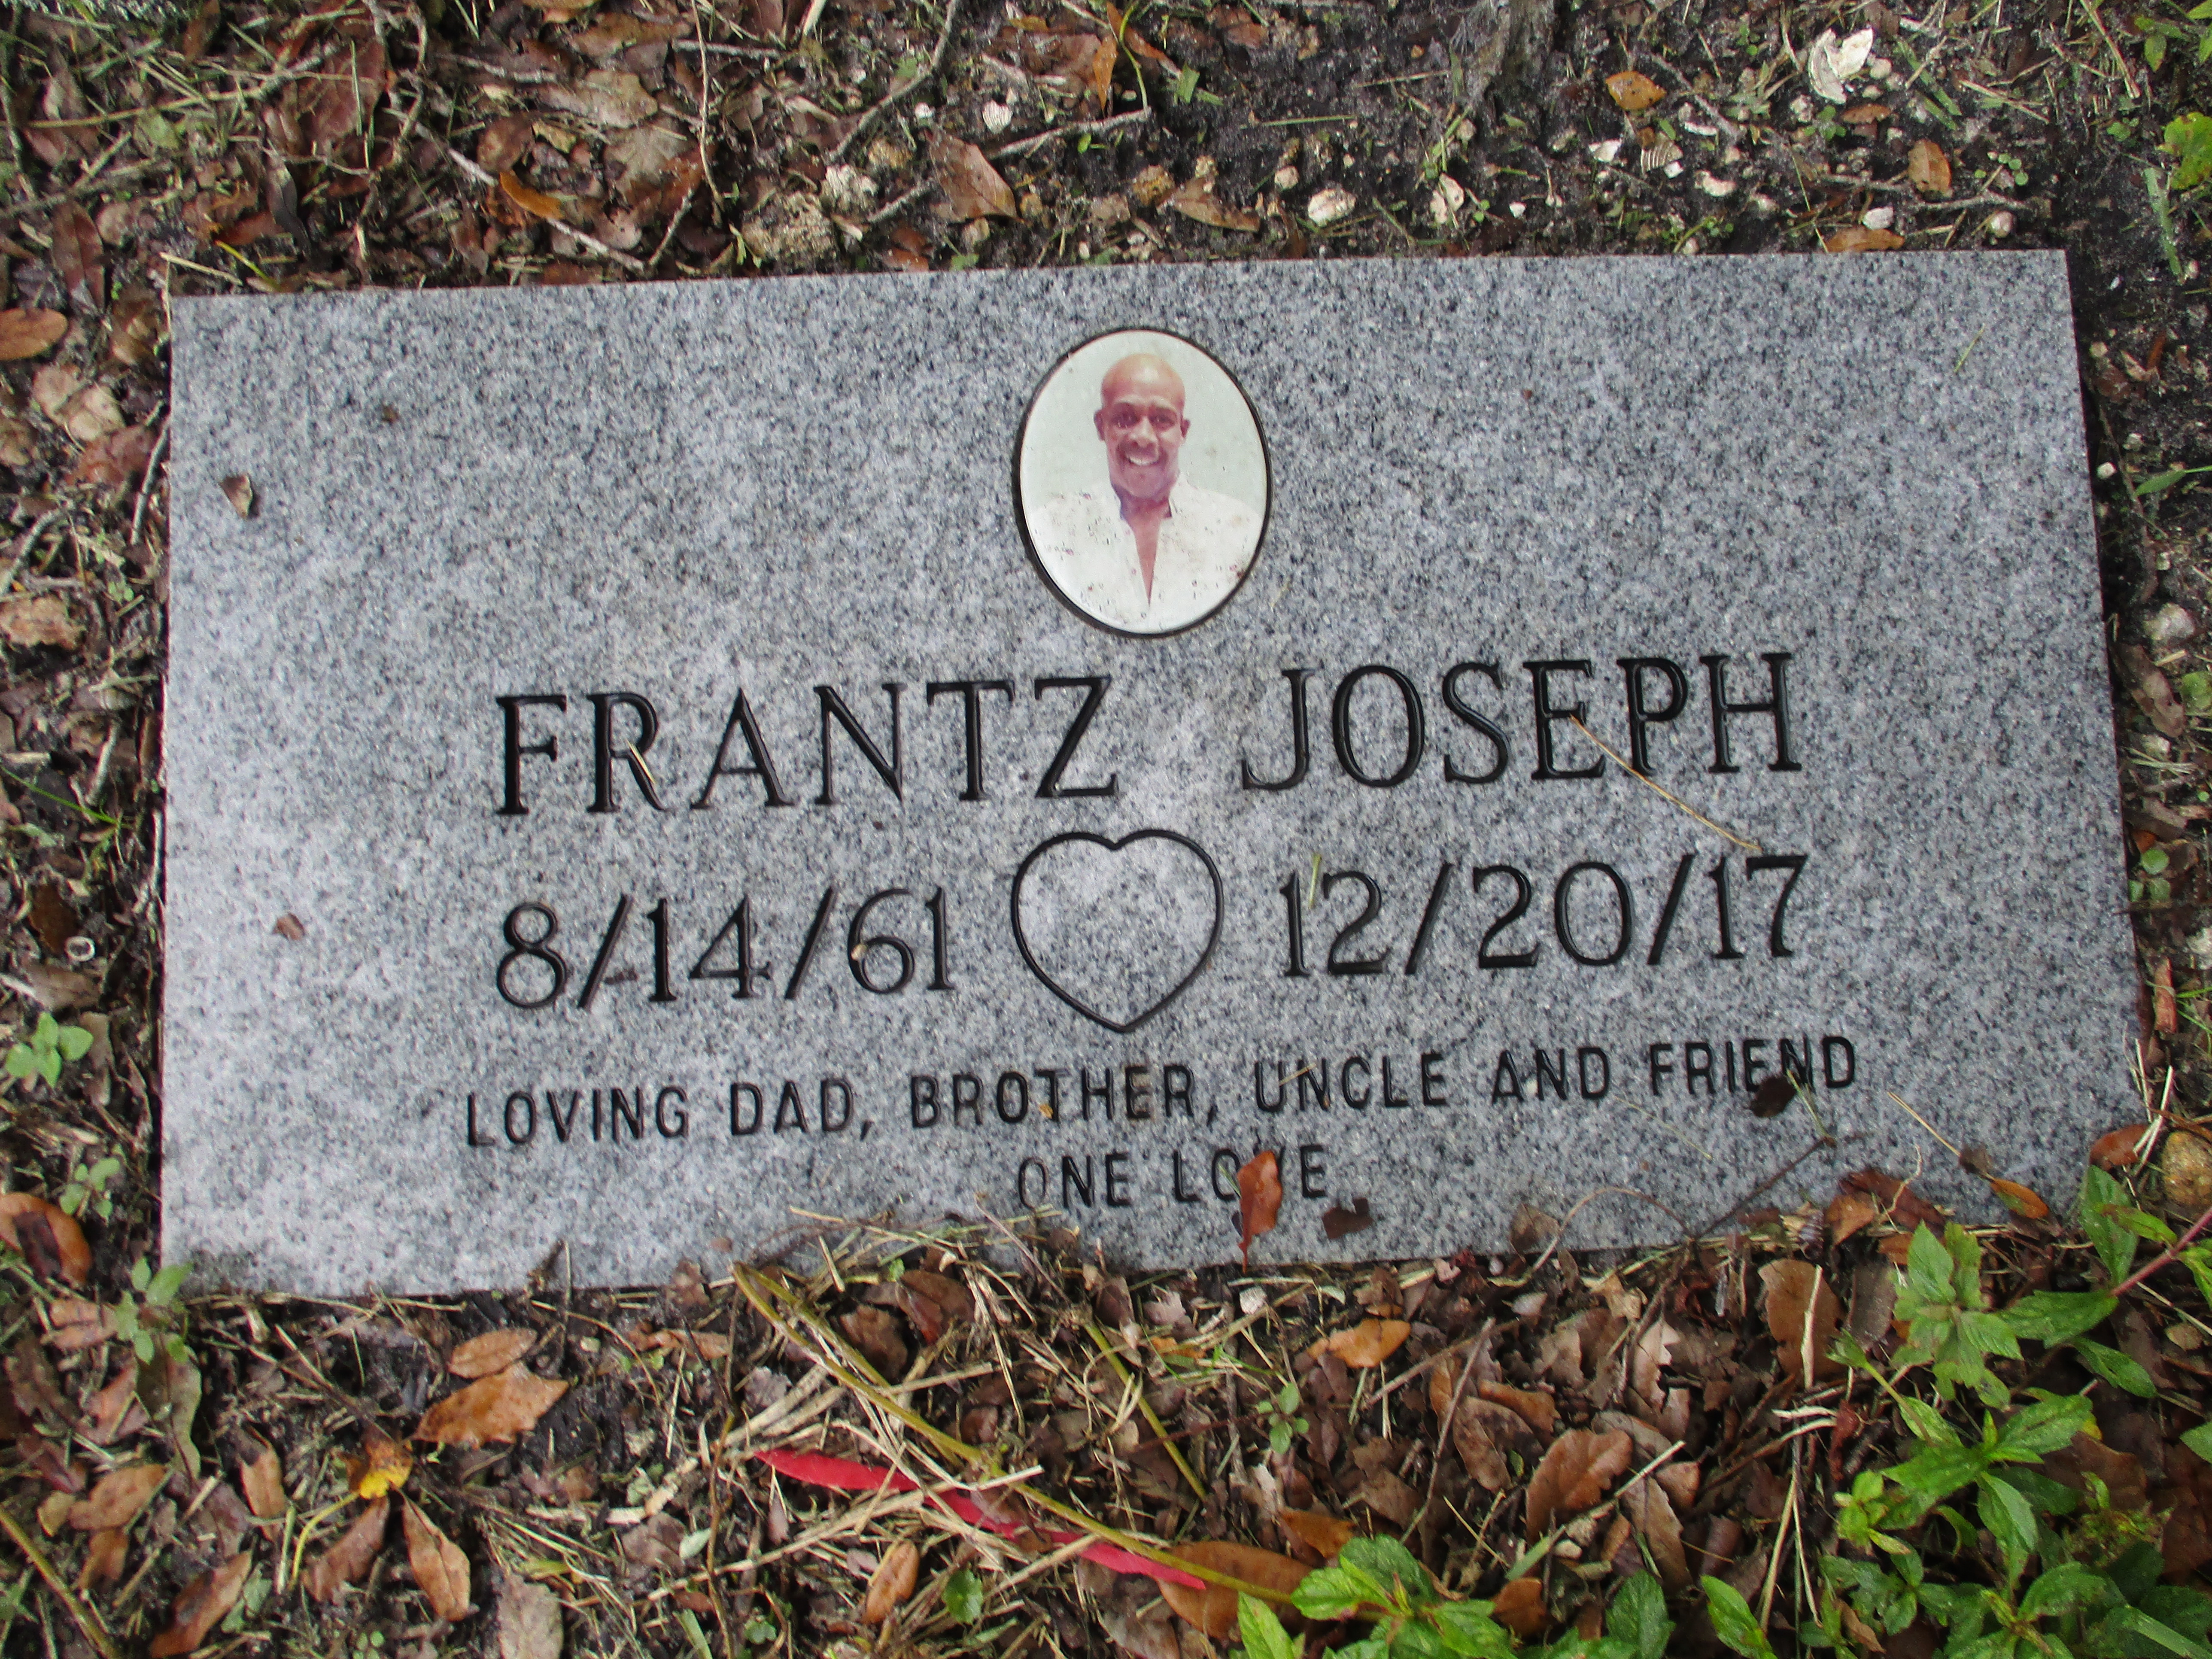 Frantz Joseph